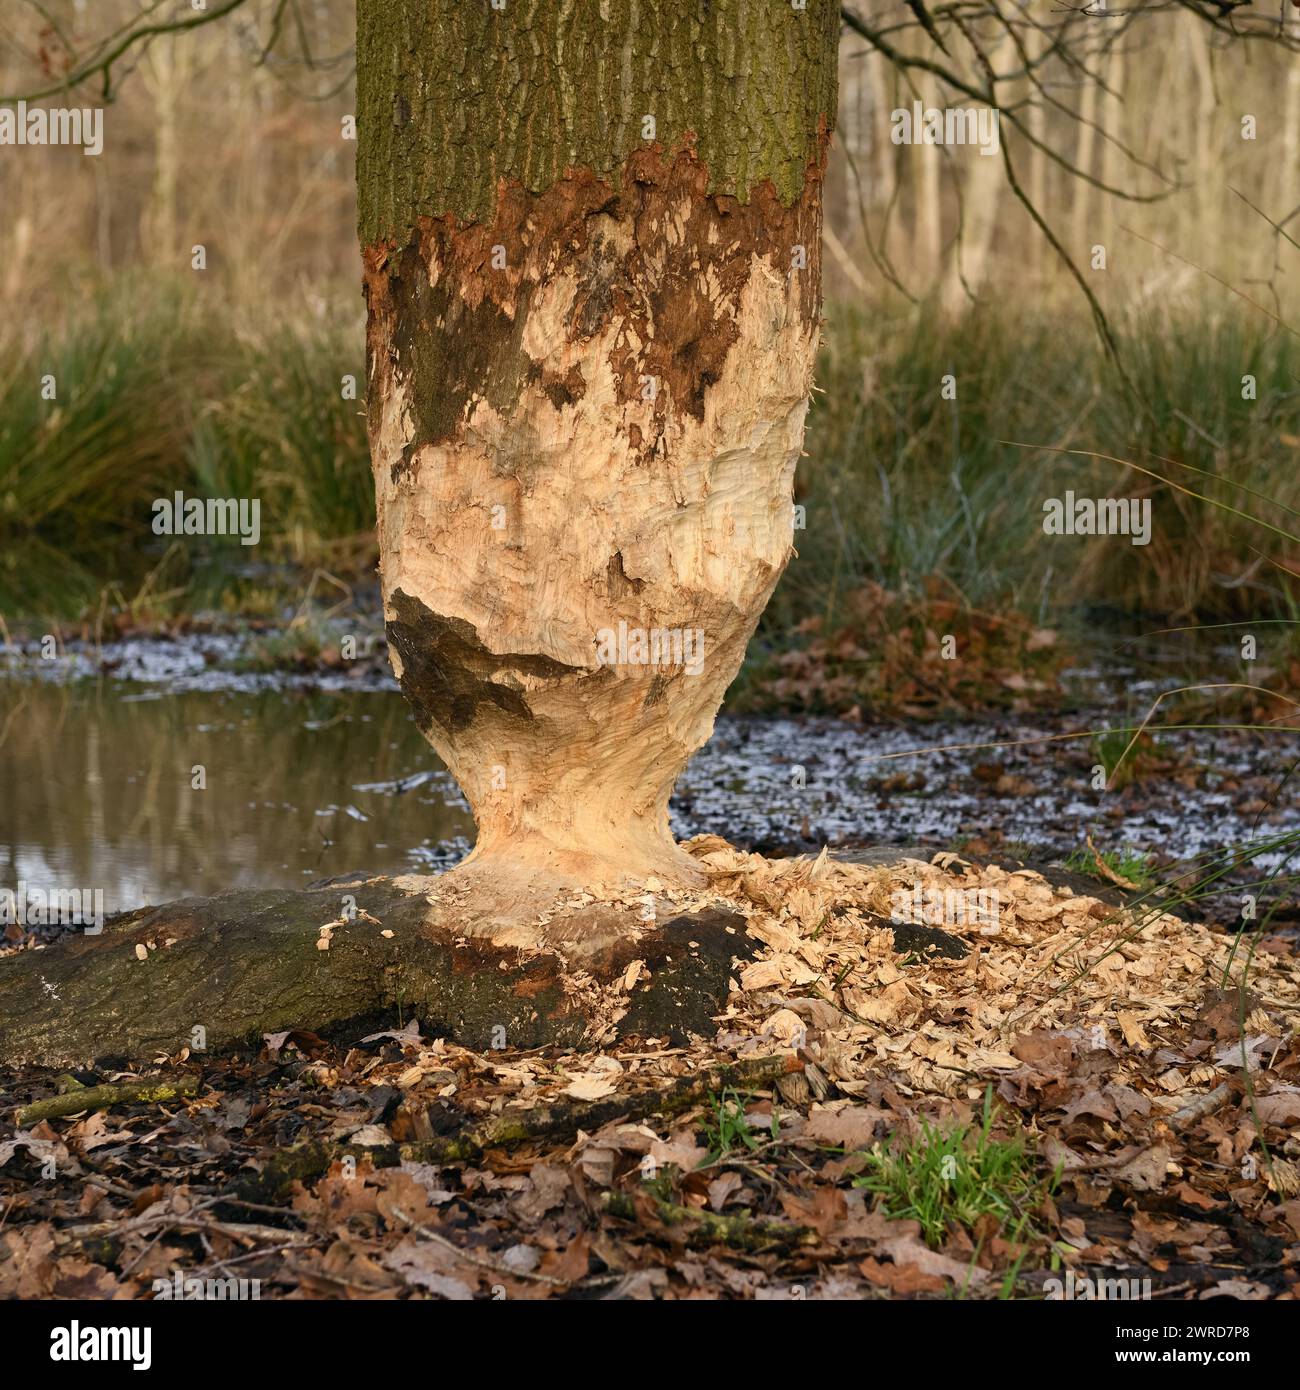 Der Biber war da... Nabbereiche ( Fagus sylvatica ) am Rand eines Wasserkörpers, Natur in Europa. Stockfoto